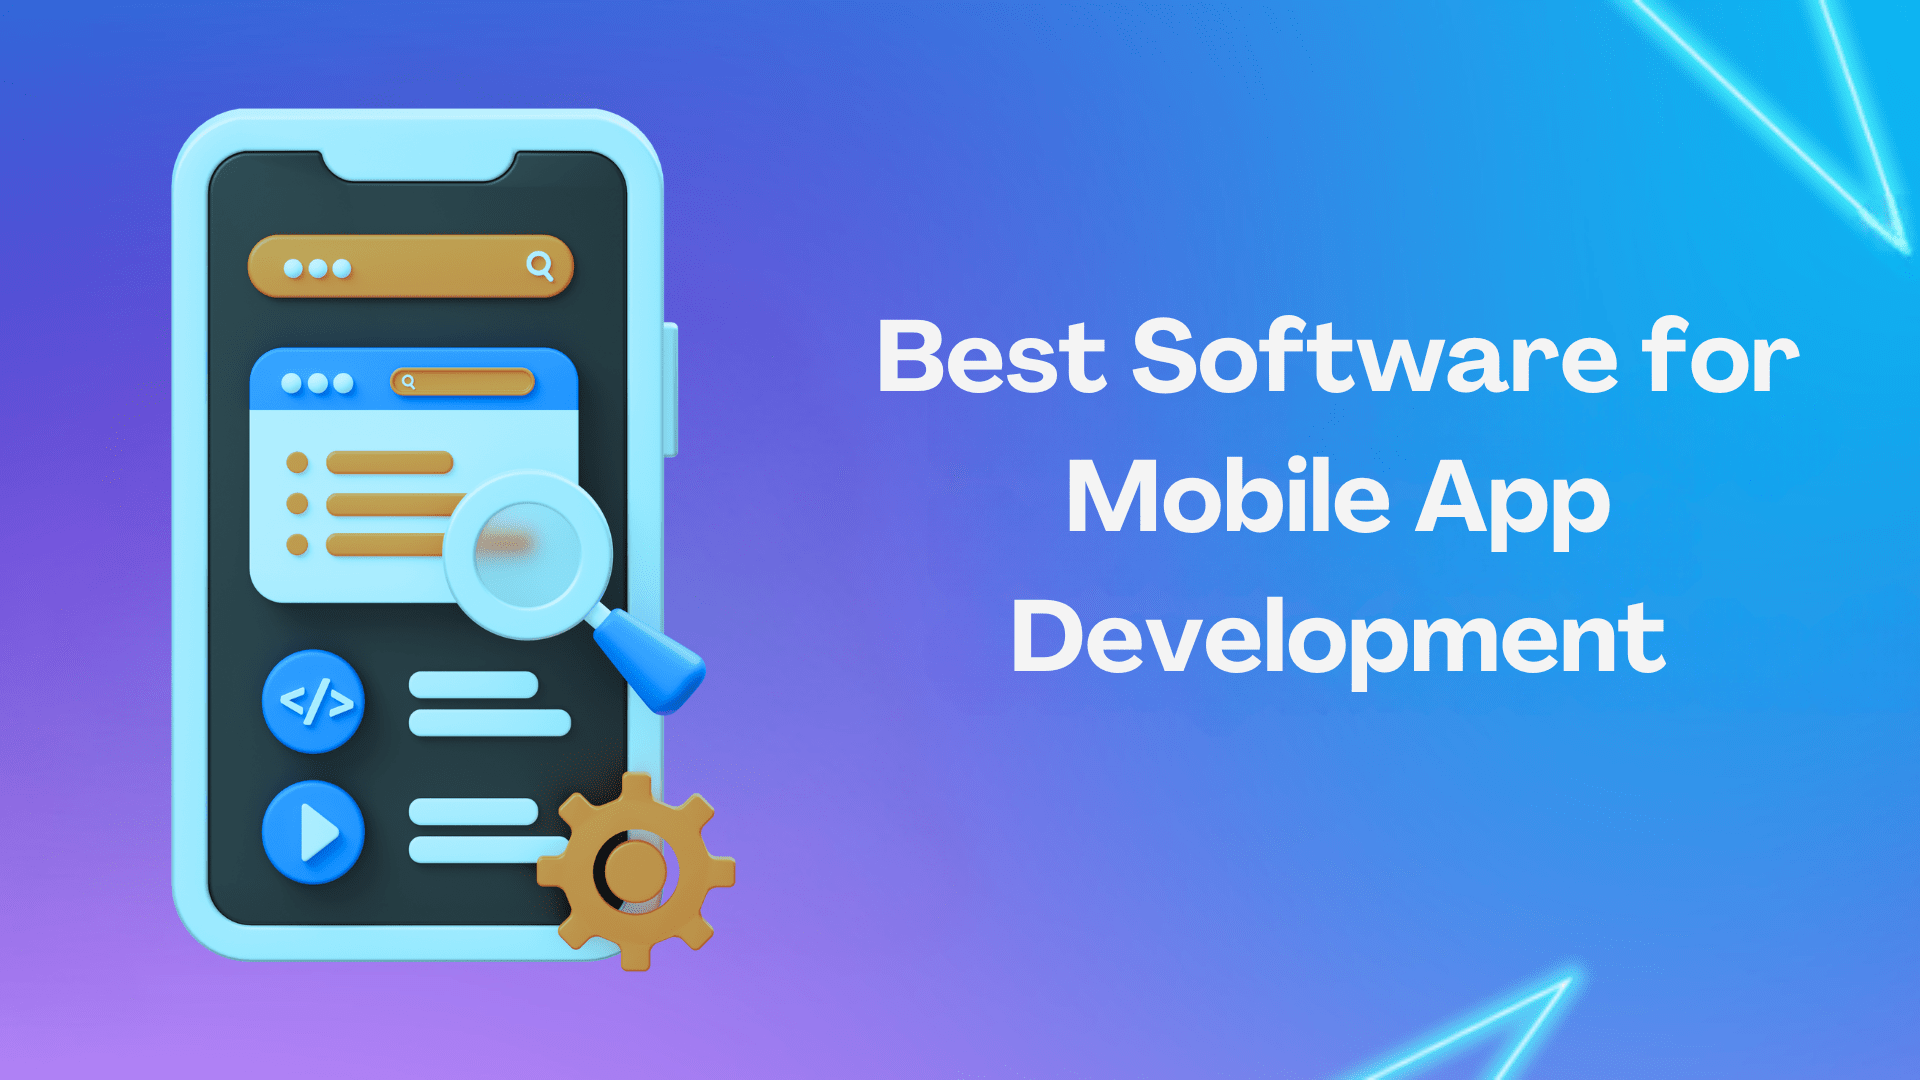 Best Software for Mobile App Development